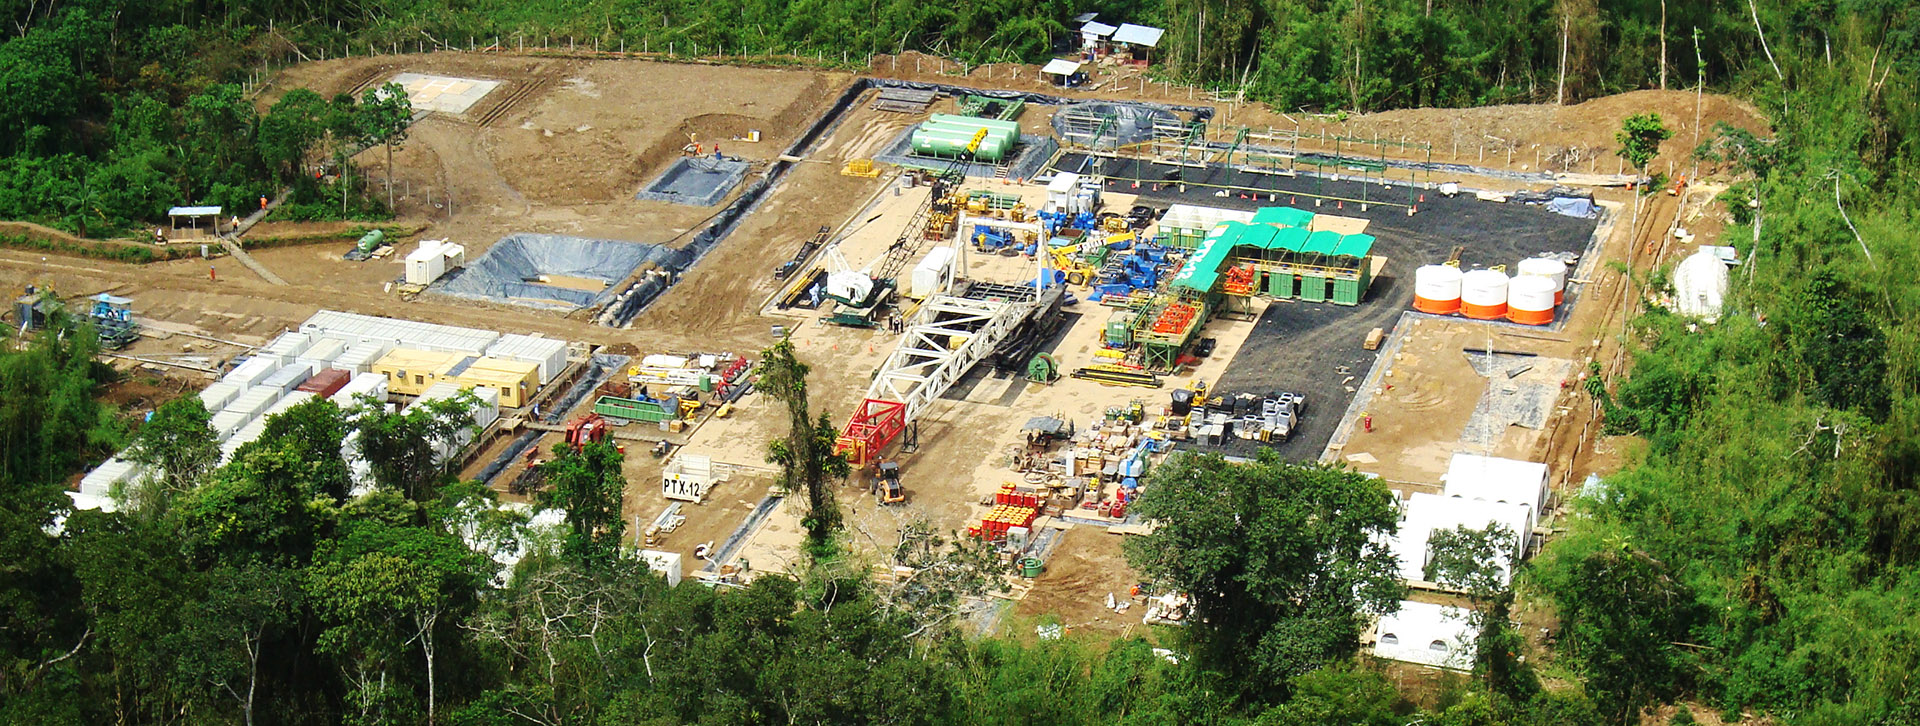 Campamento Base La Peruanita Lote 58 Petrobras, en Urubamba